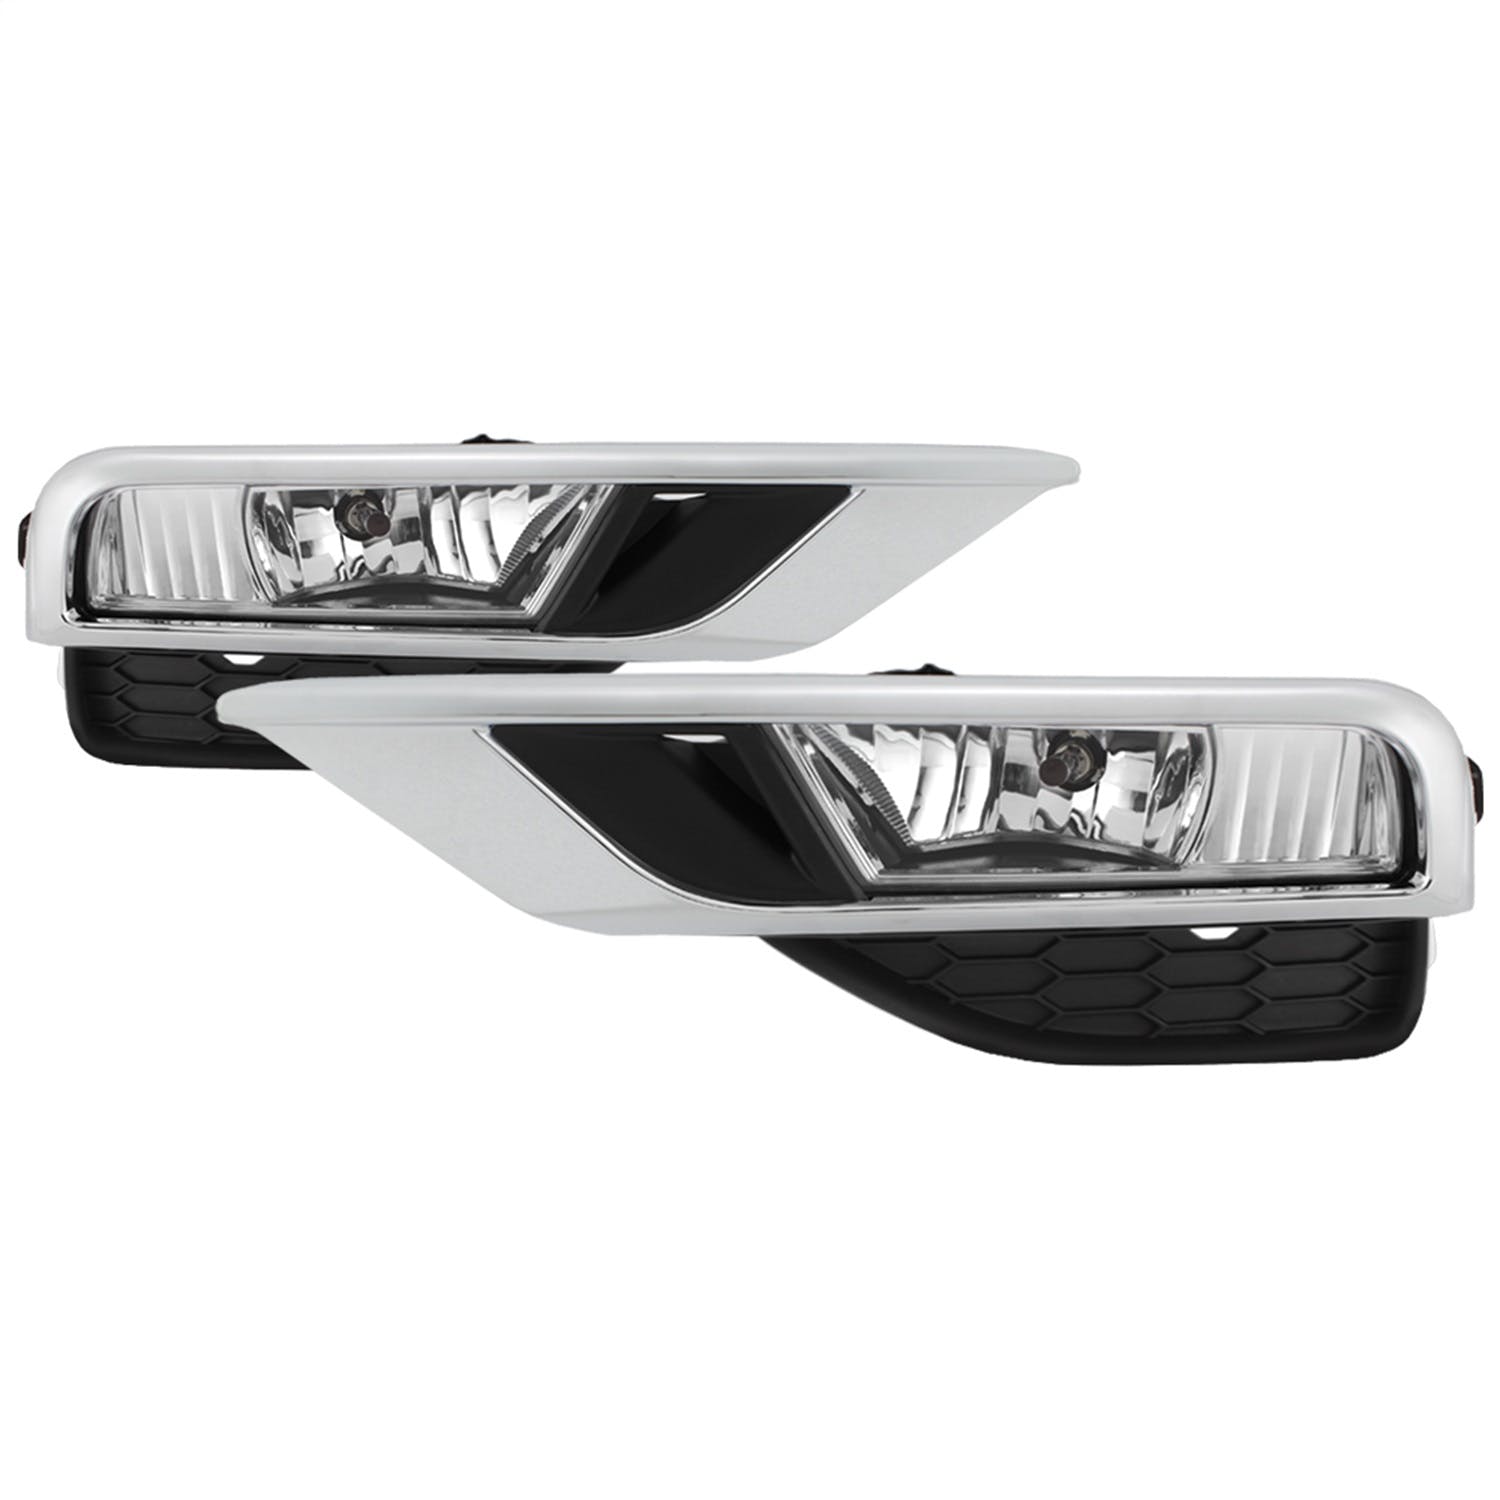 Spyder Auto 9031489 (Spyder) Honda CRV 2015-2016 OEM Fog Lights W/Switch and Cover-Clear